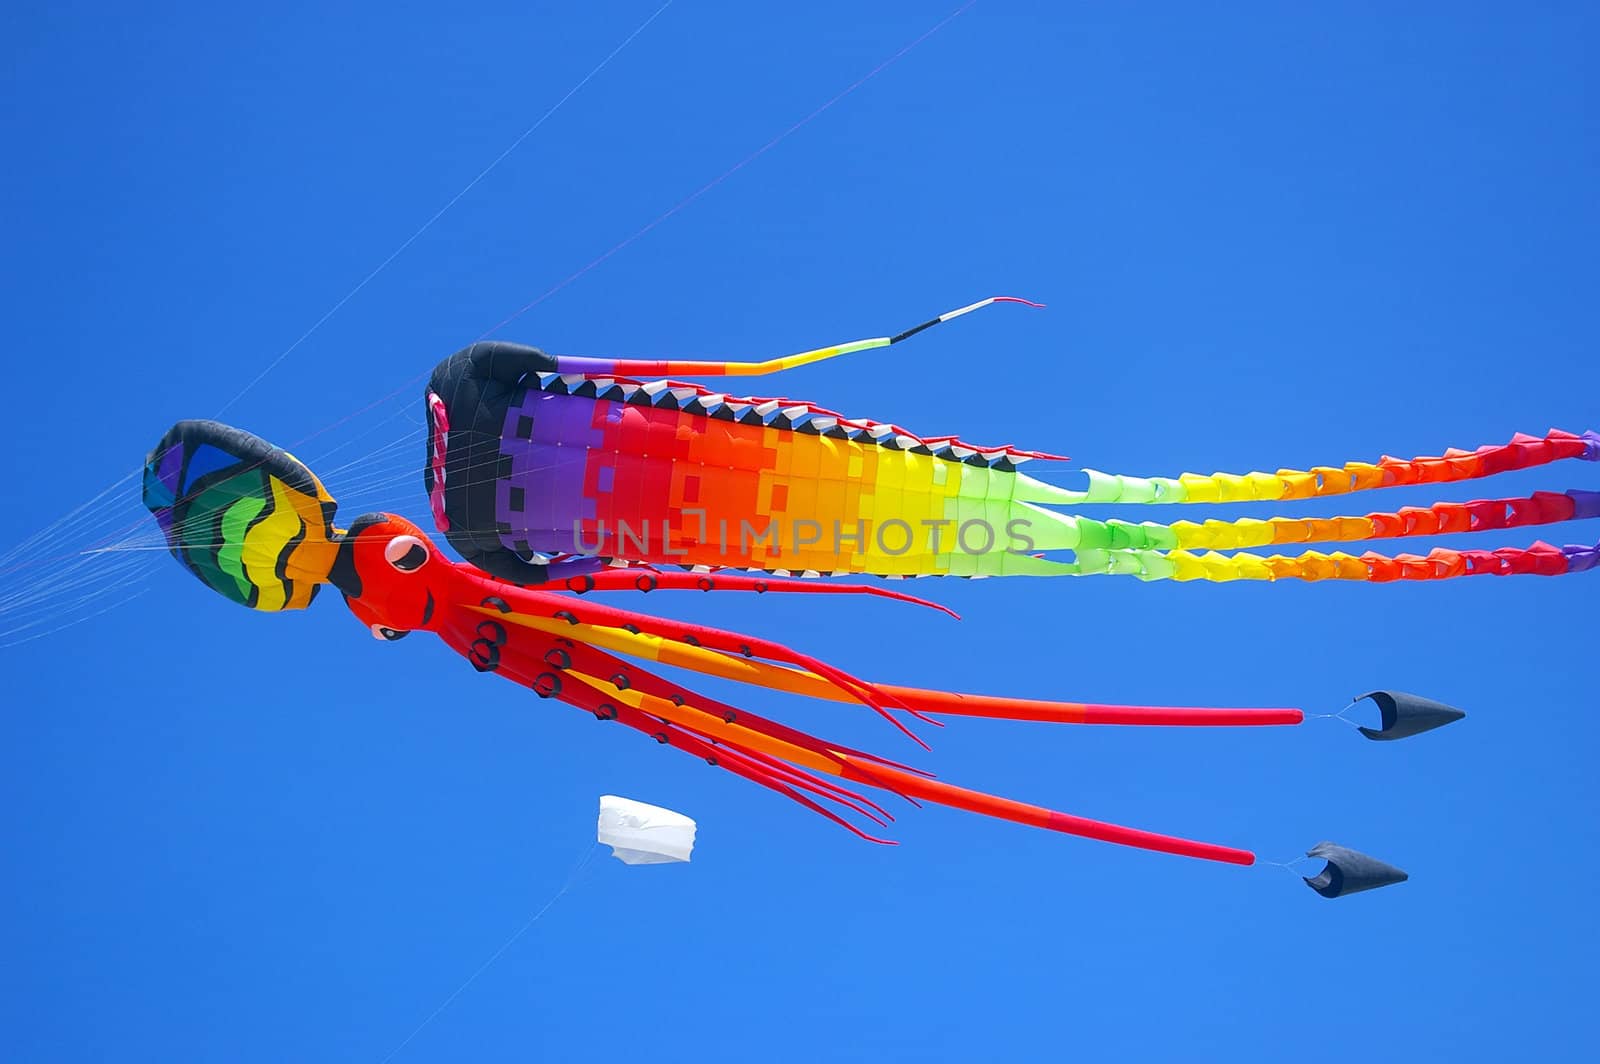 Colorful kites being flown at the Sanur beach games, Sanur, Bali, Indonesia.